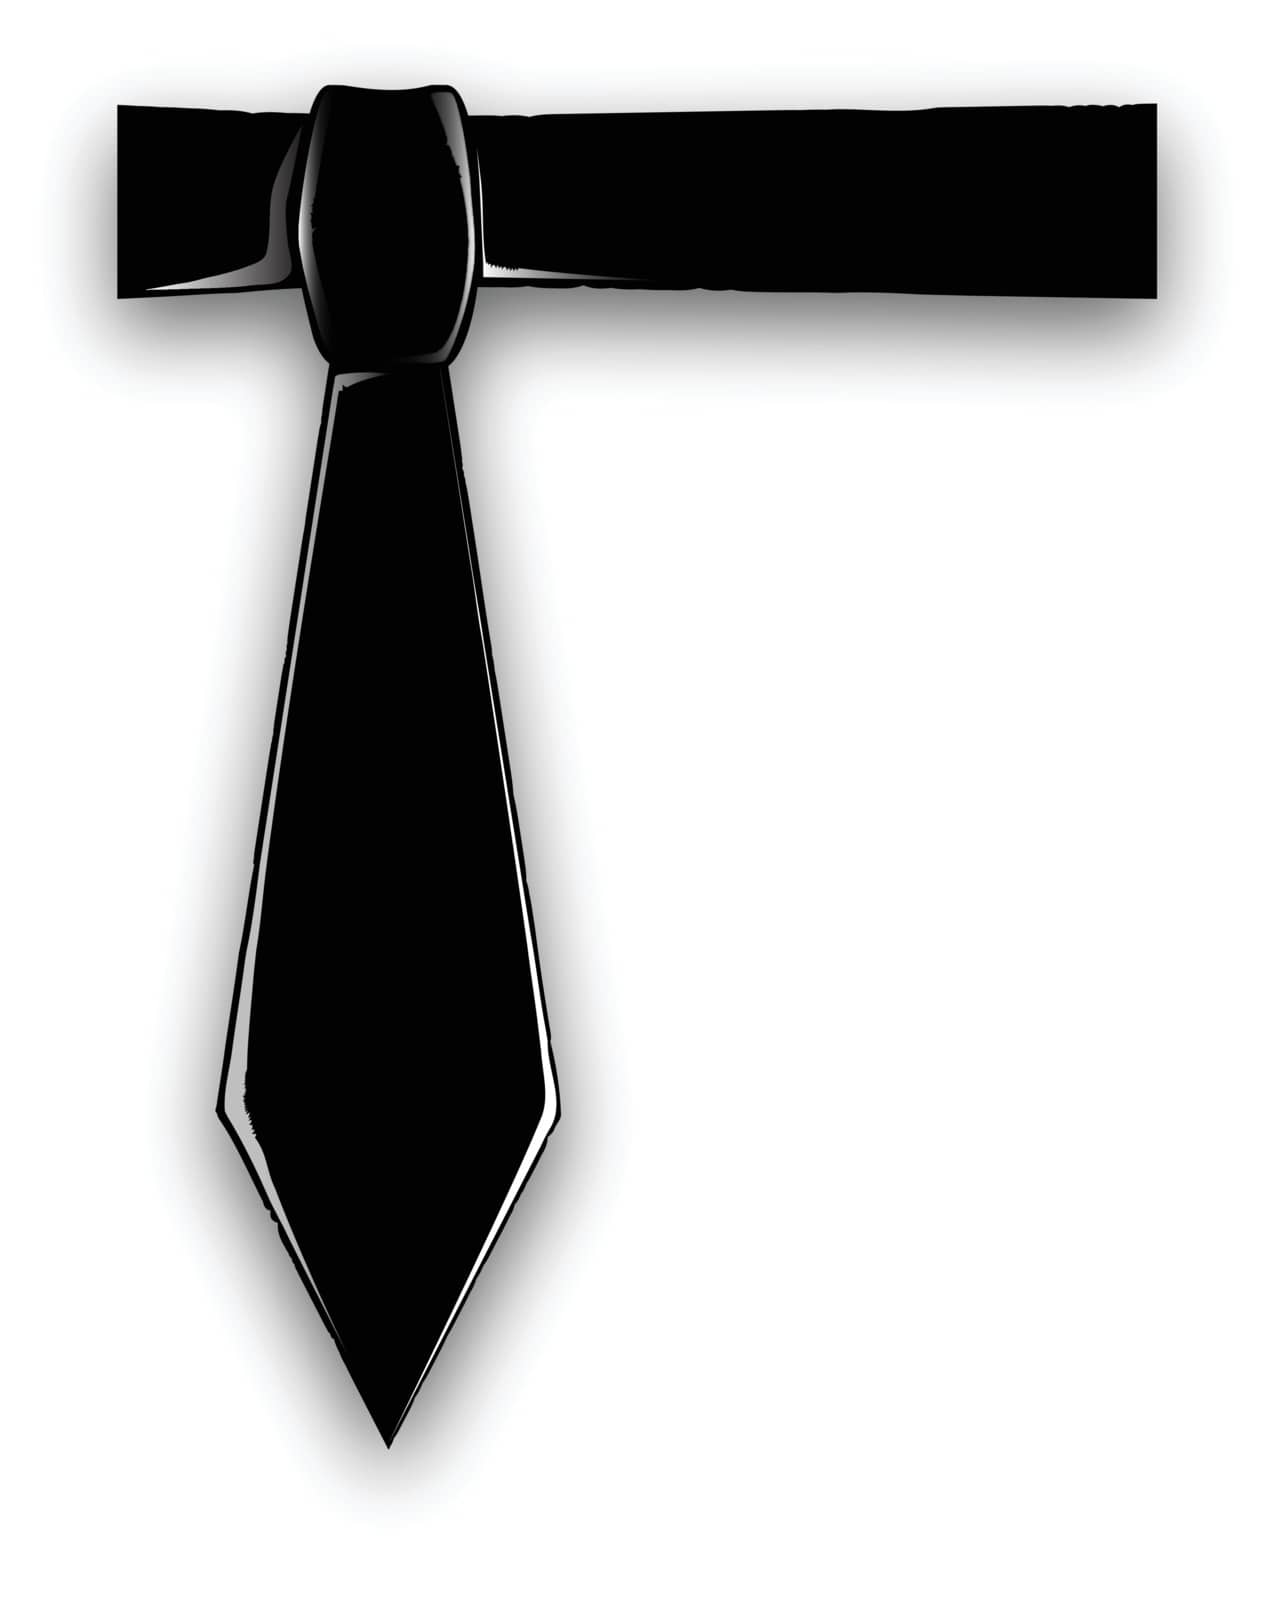 A black tie set on a white blue background.